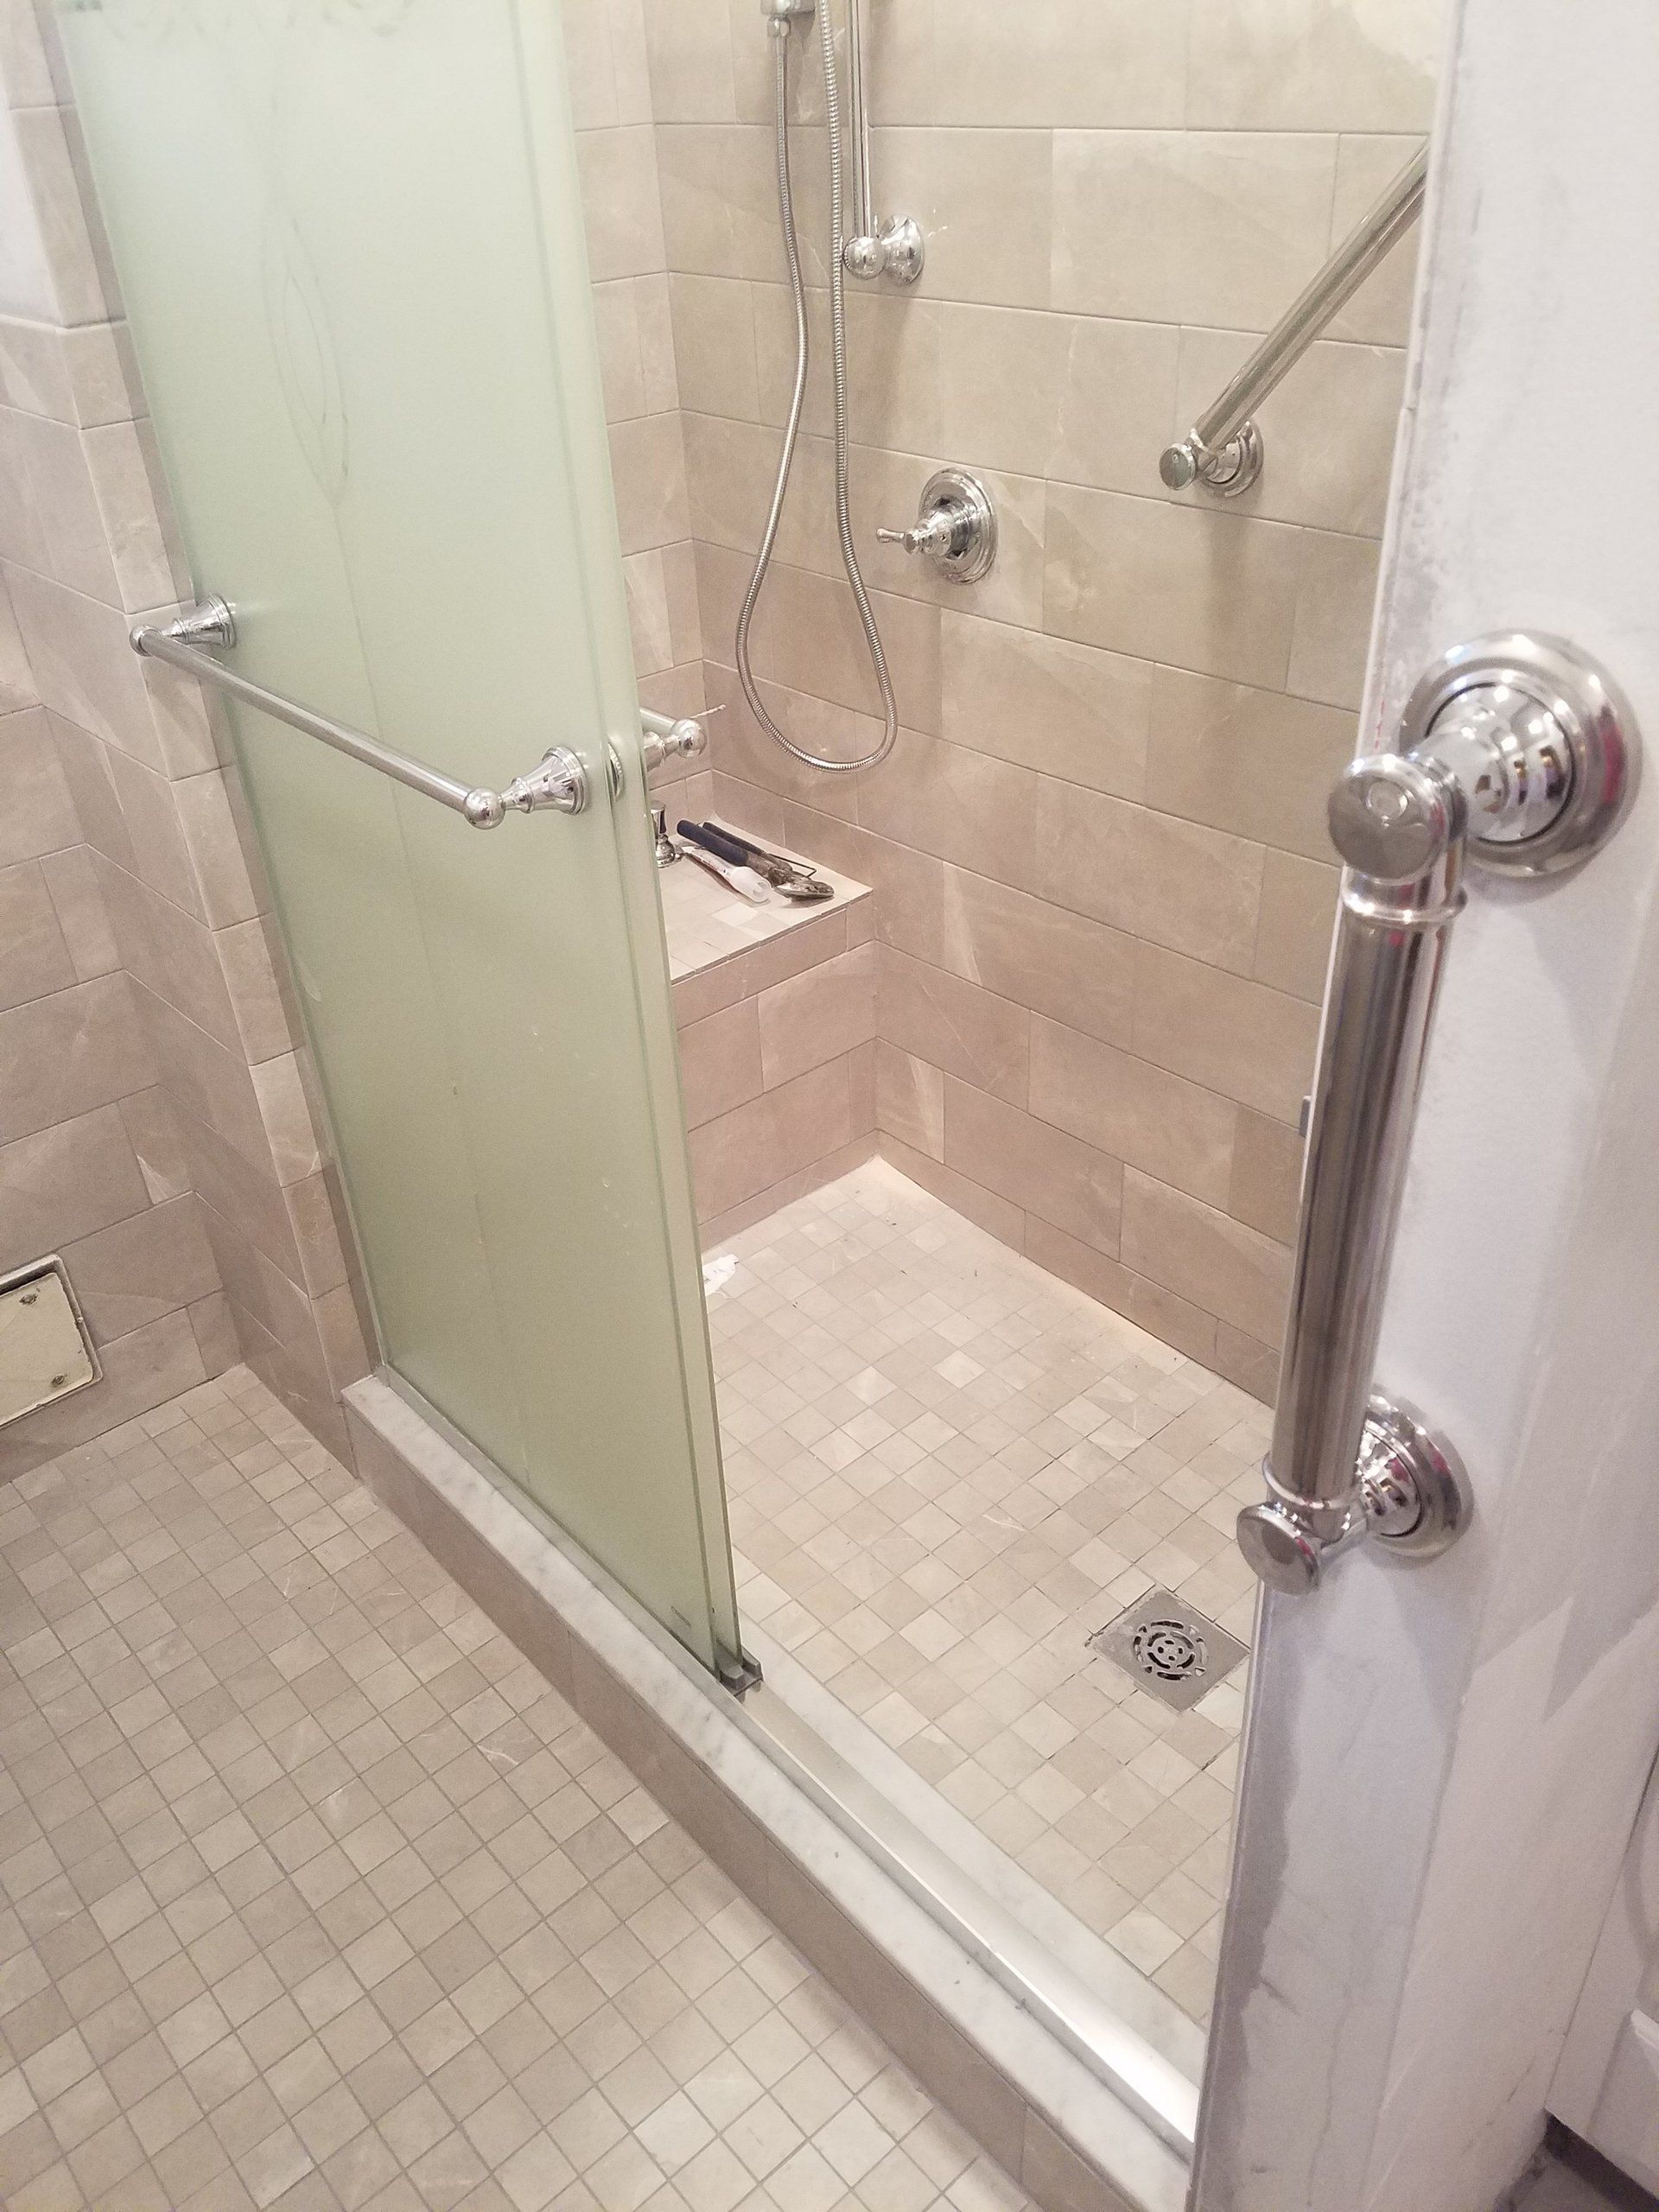 senior bathroom remodel shower conversion shower grab bars safety features in Philadelphia